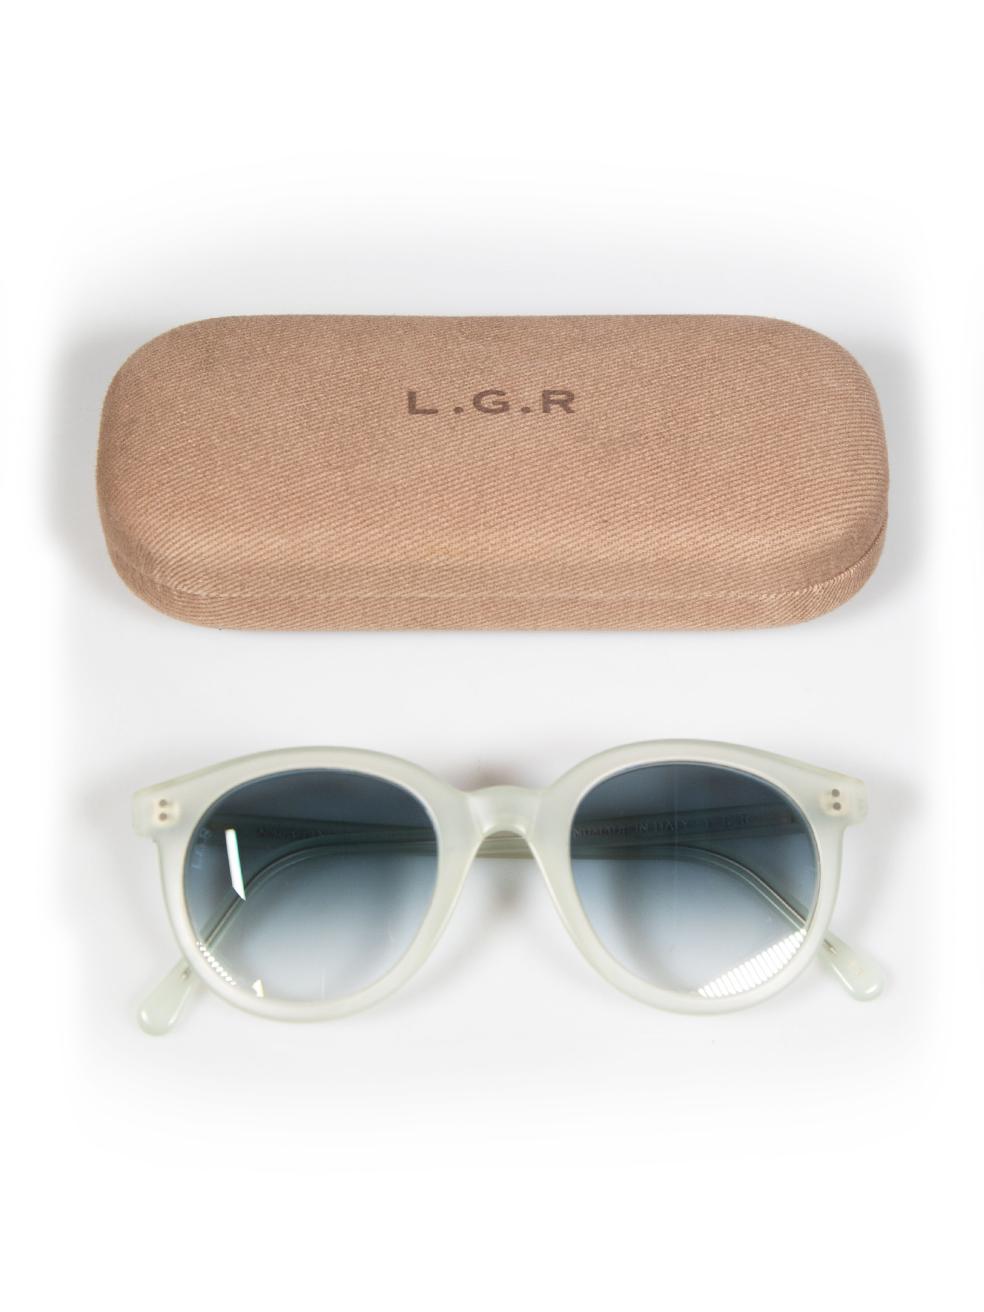 L.G.R Blue Round Frame Mauritania Sunglasses For Sale 2